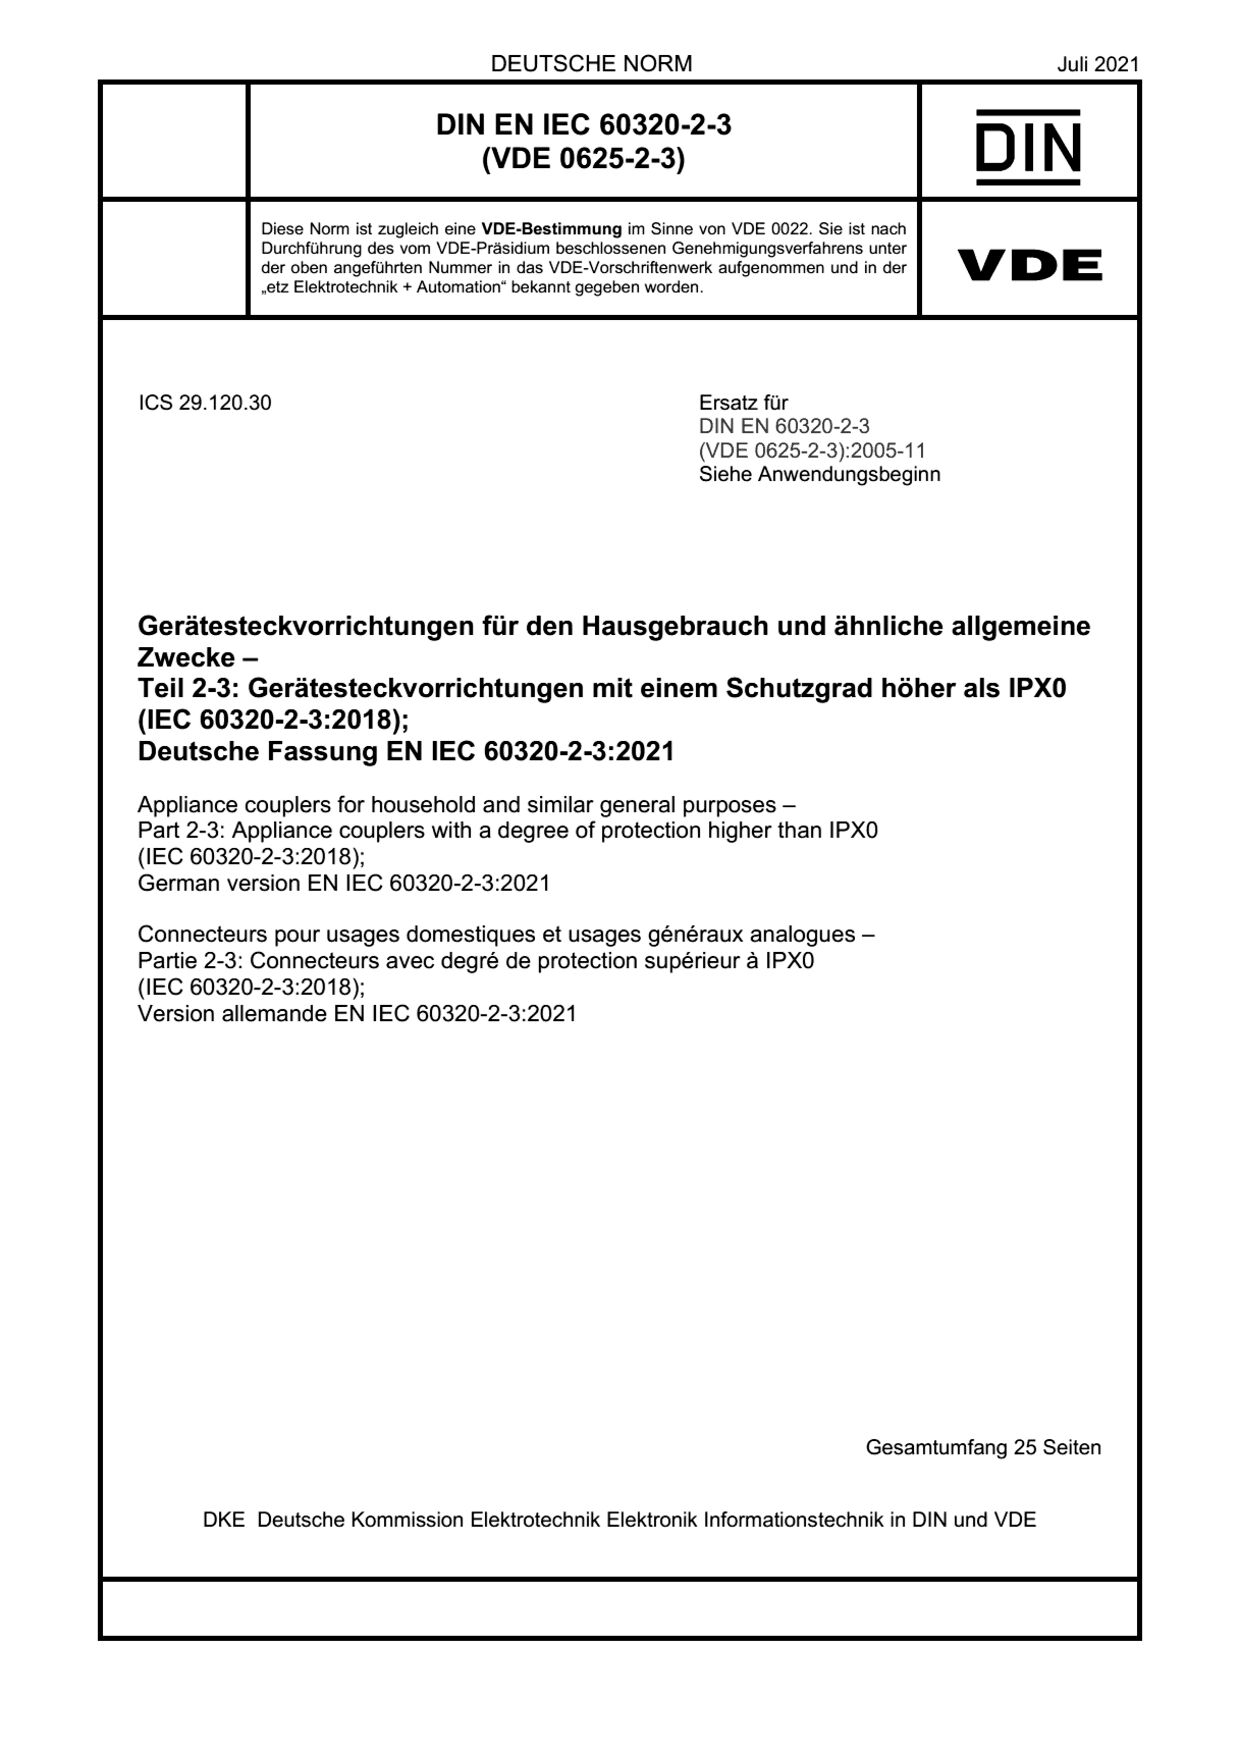 DIN EN IEC 60320-2-3:2021封面图